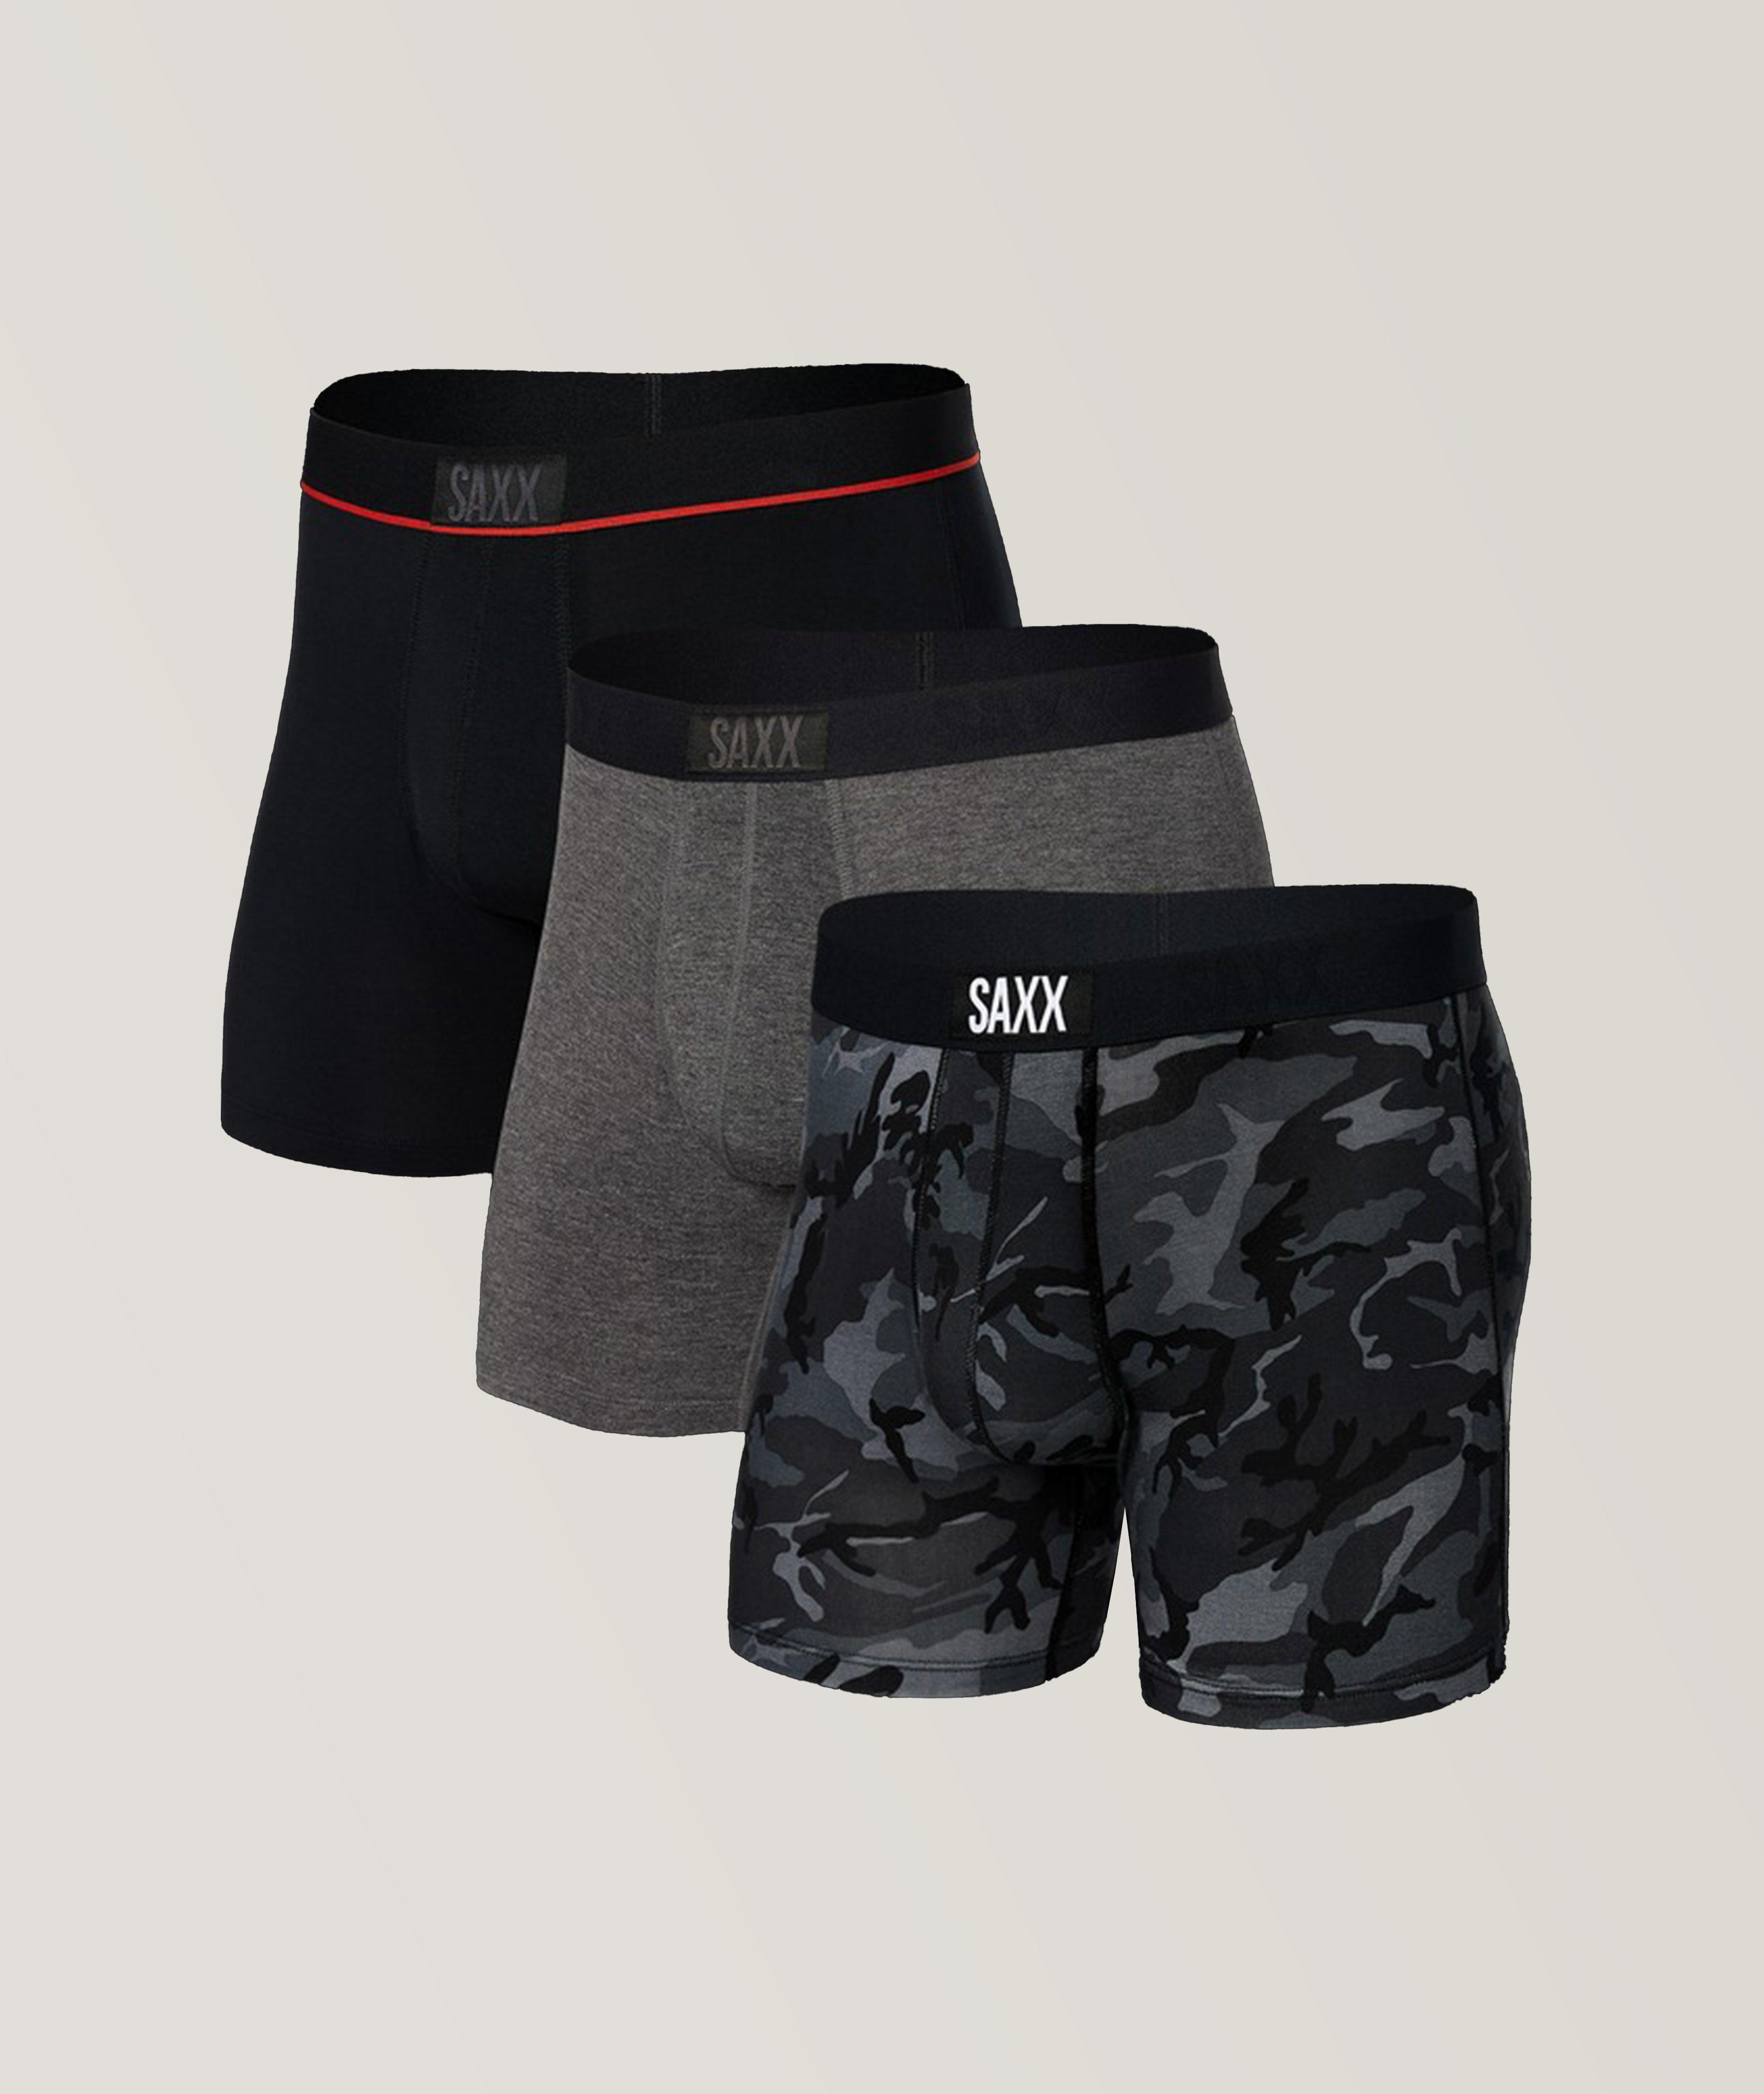 SAXX 3-Pack Vibe Super Soft Camo Boxer Briefs, Underwear